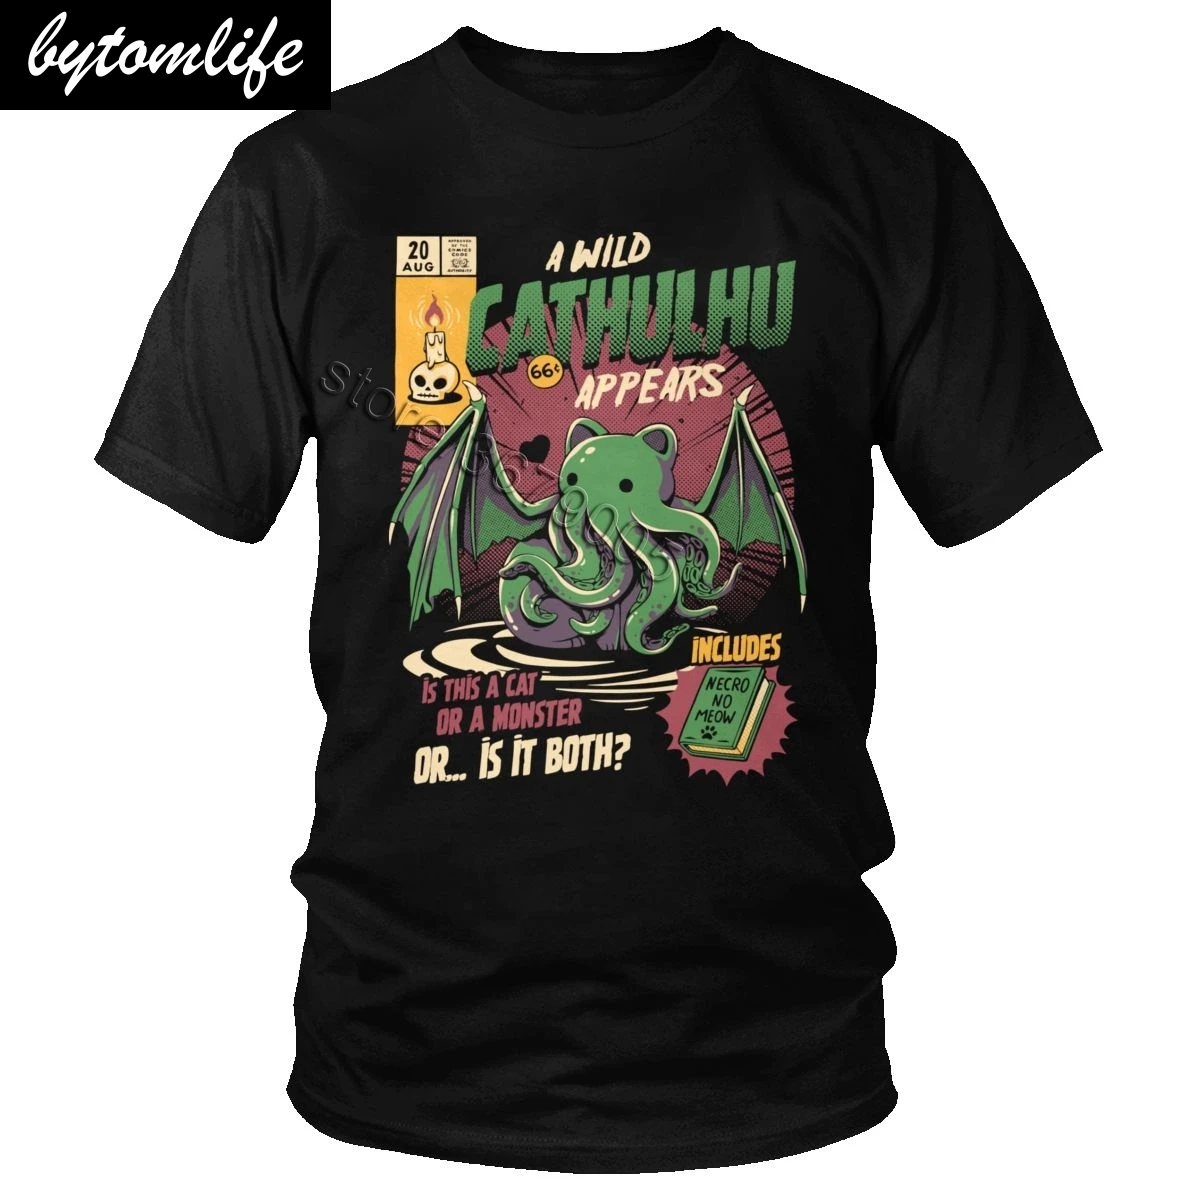 

Funny A Wild Cthulhu T-Shirt Summer Cotton Cat or Monster T Shirt Short Sleeves Harajuku Tshirt Men Kaiju Lovecraft Movie Tee